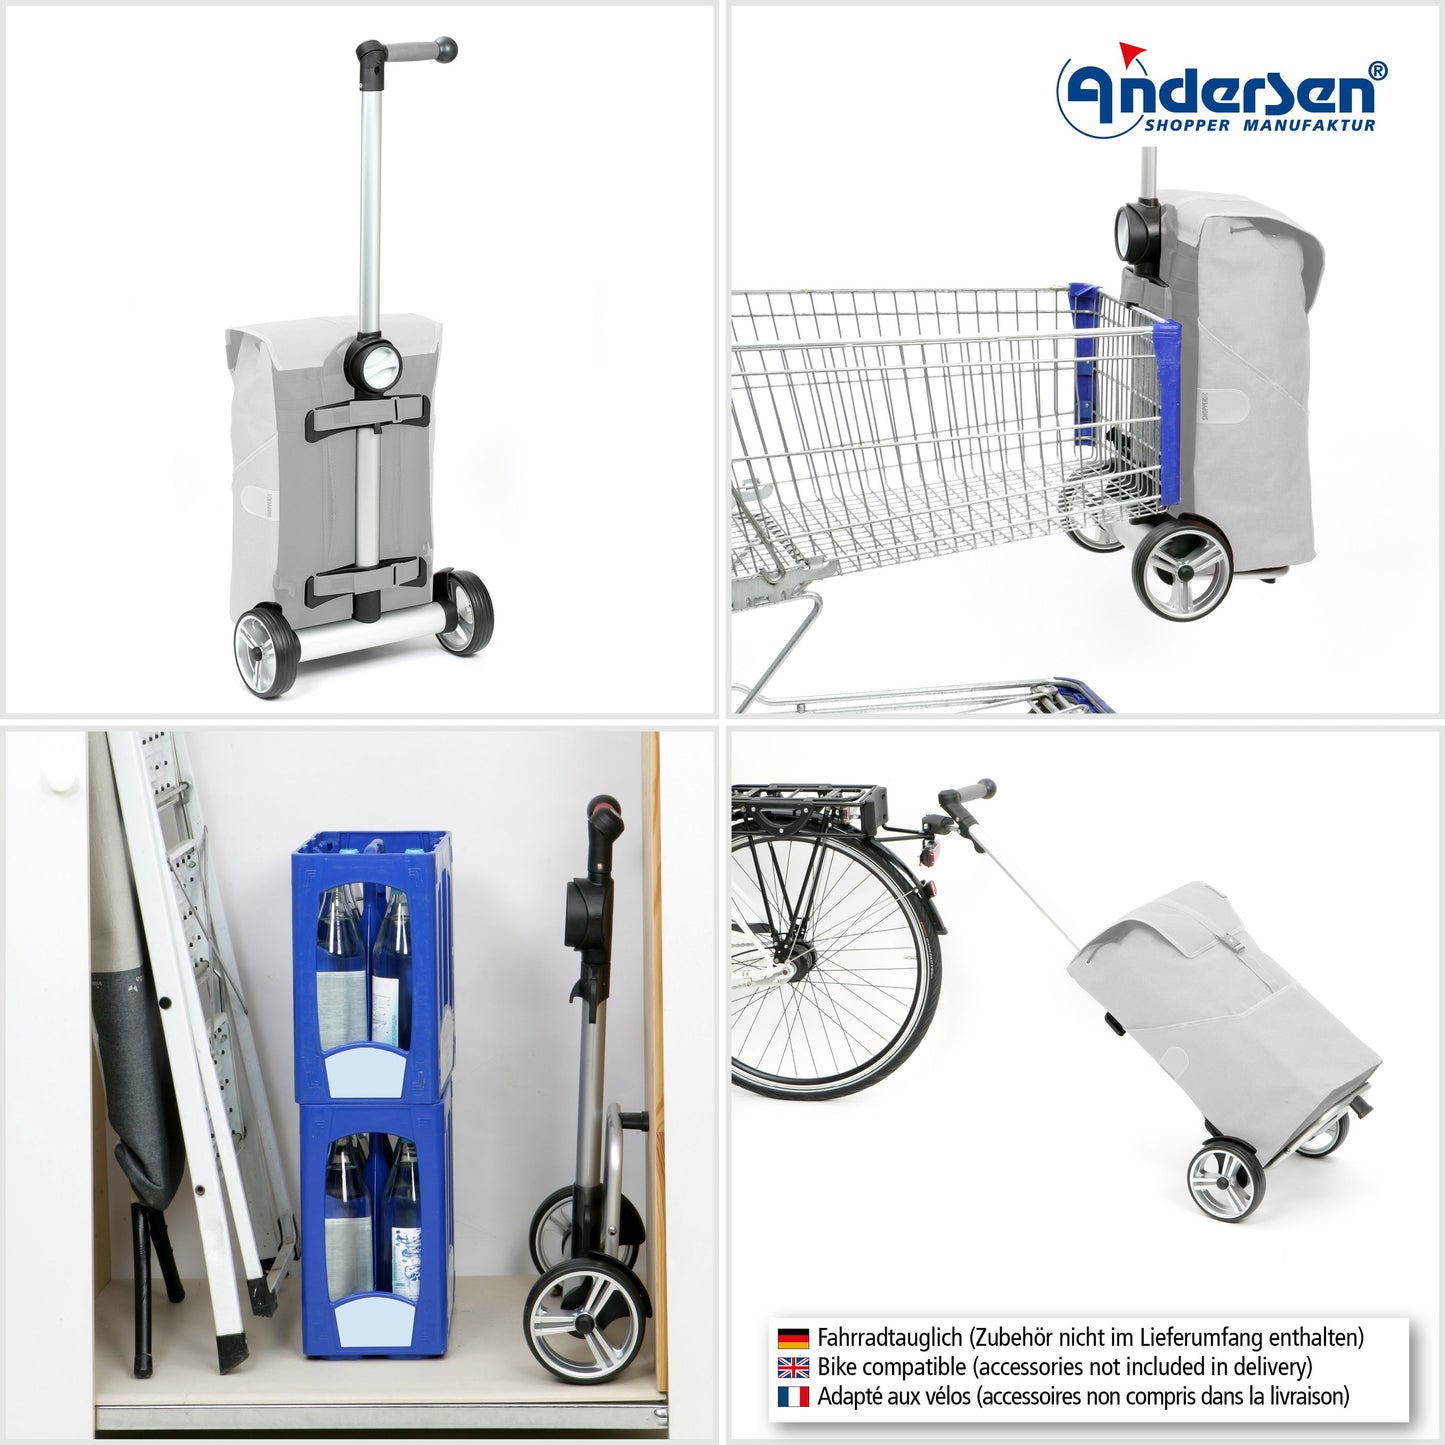 Andersen Shopper Manufaktur-Unus Shopper Auke flieder-www.shopping-trolley.ch-bild5